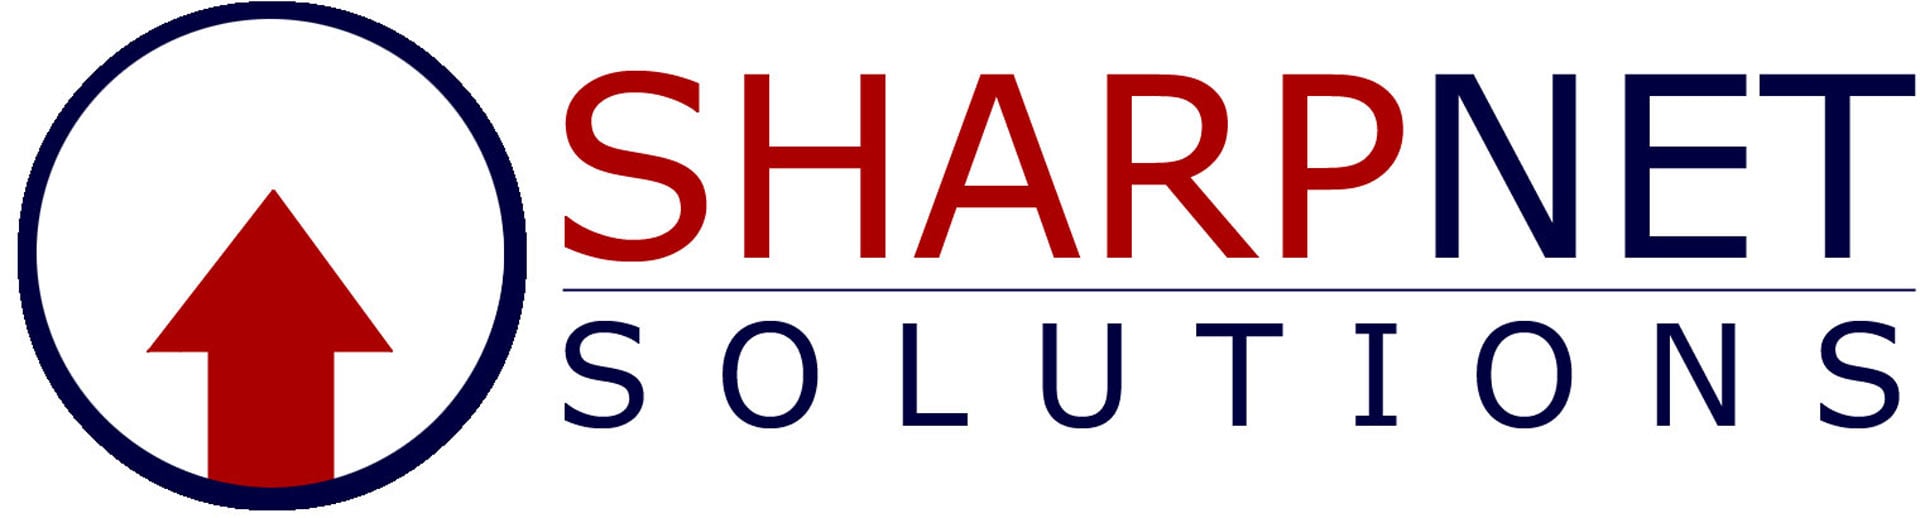 Top Local Search Engine Optimization Company Logo: SharpNet